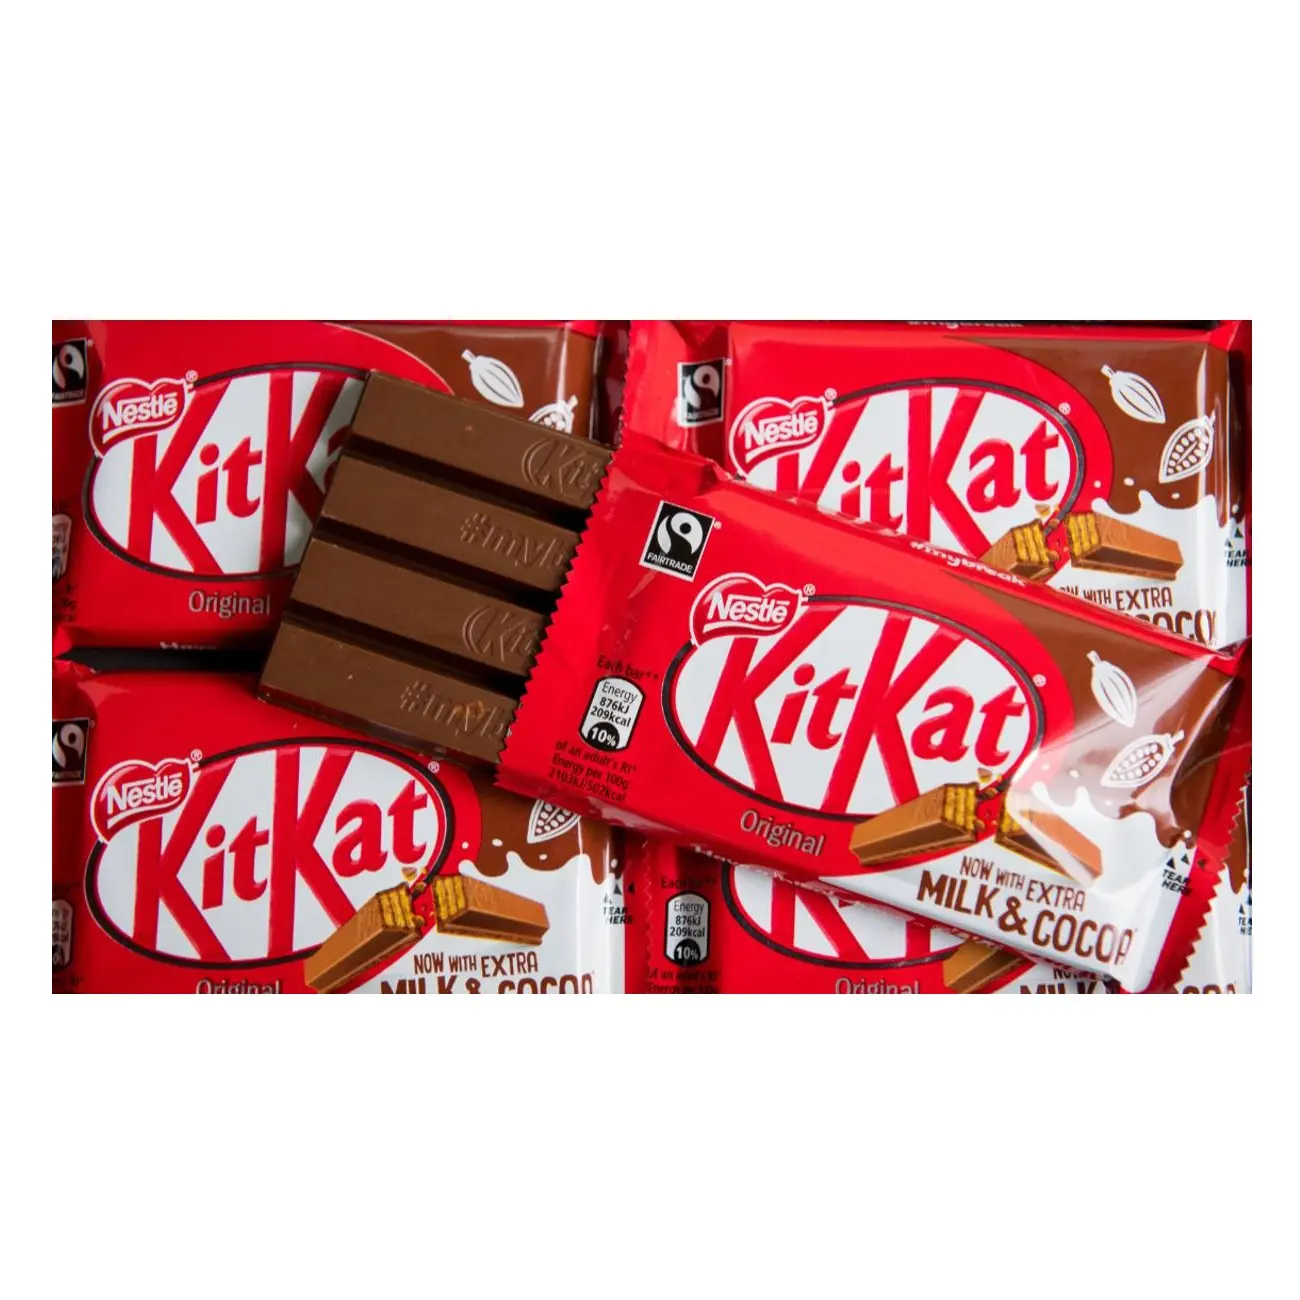 Nestlé Kit Kat 4 doigts 166g à vendre